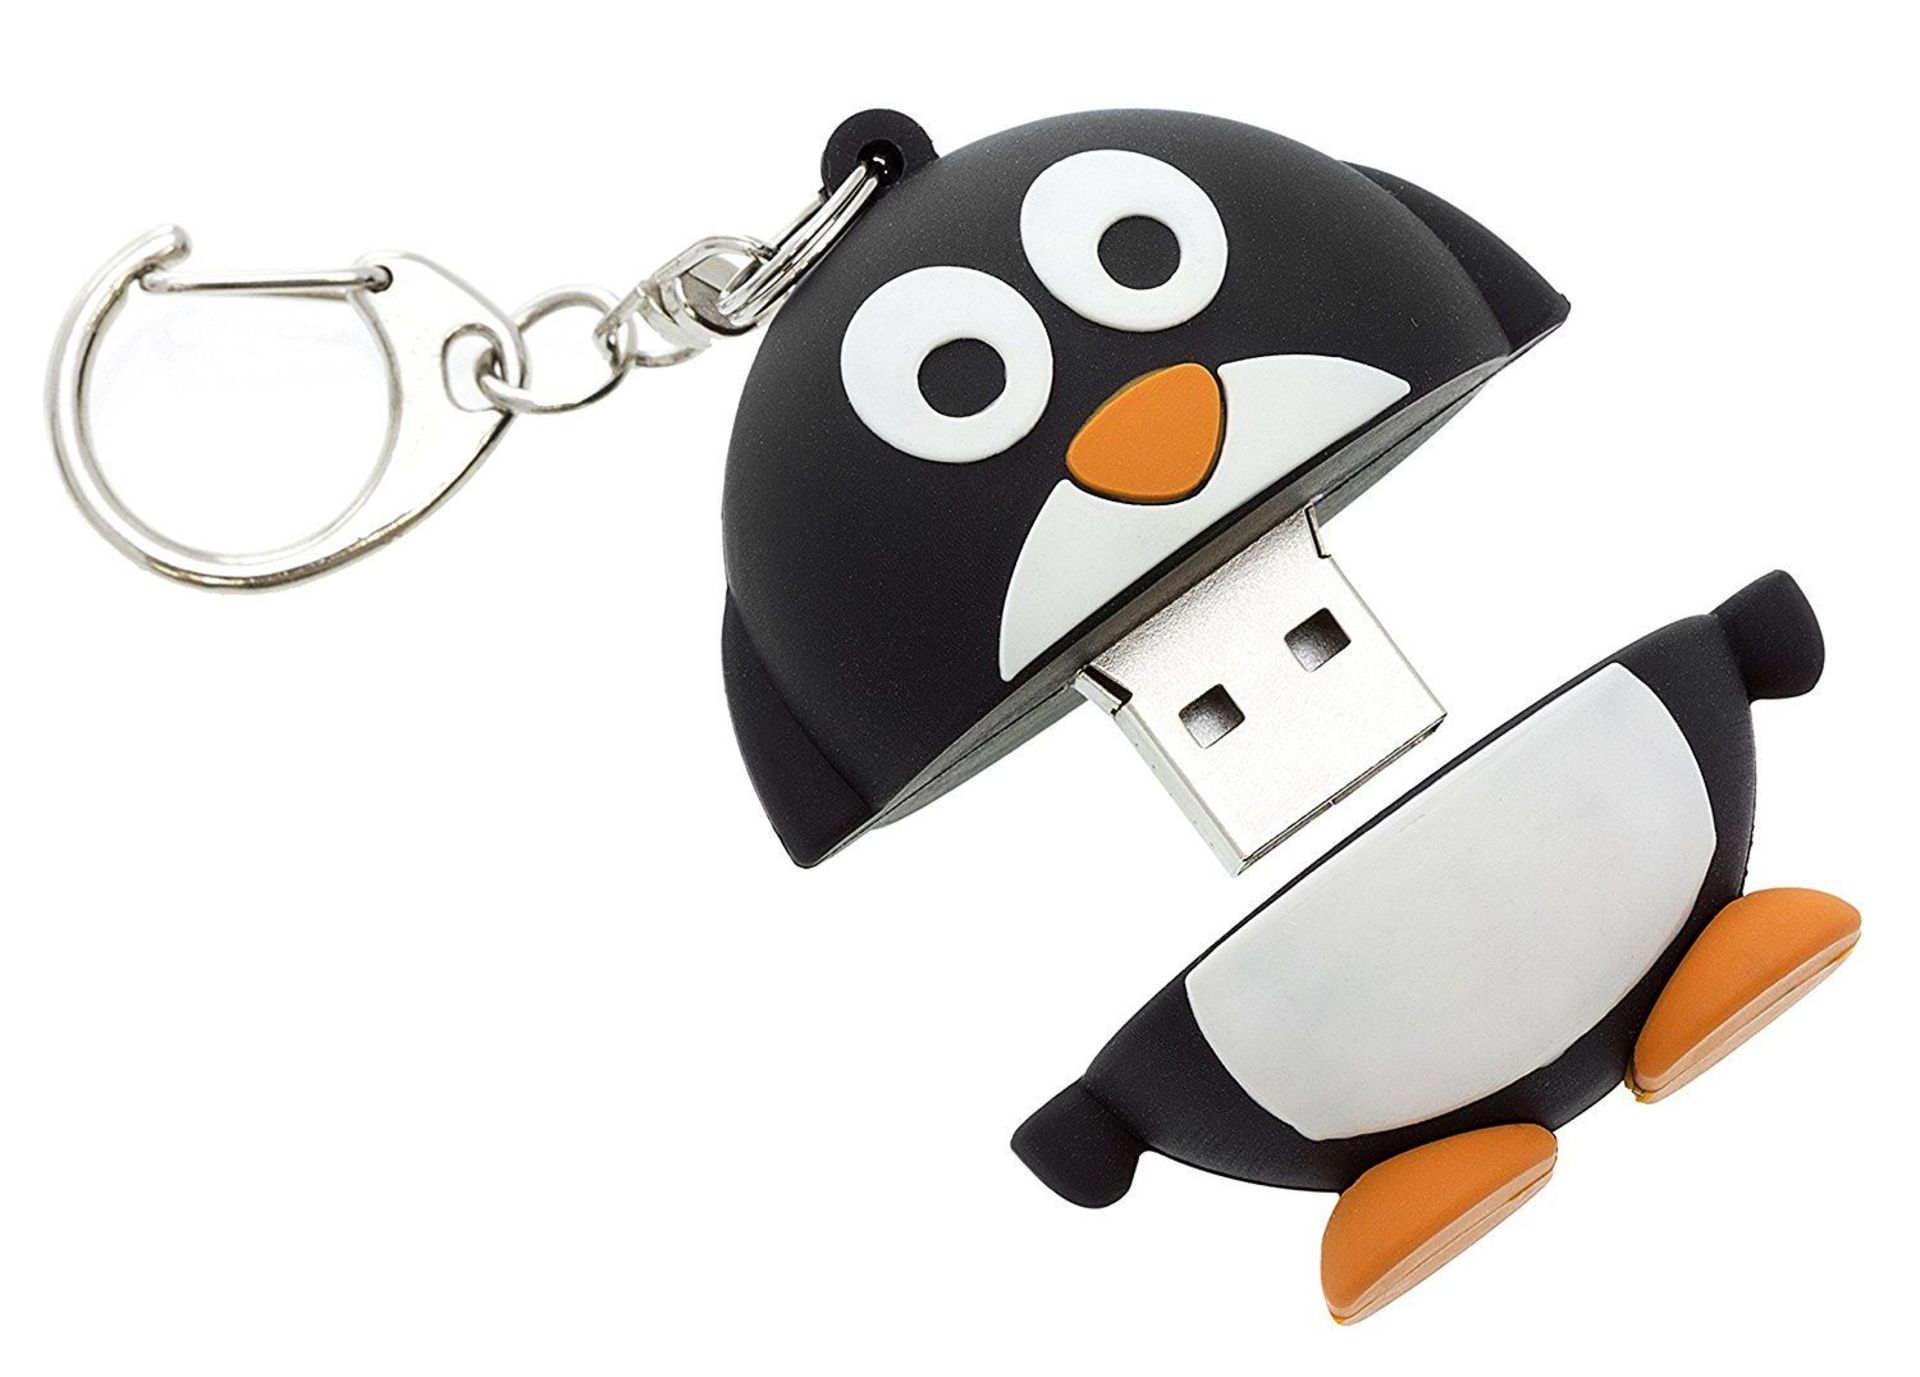 V *TRADE QTY* Brand New My Doodles 8GB Penguin USB Flashdrive - Ebay Price £19.92 X 6 YOUR BID PRICE